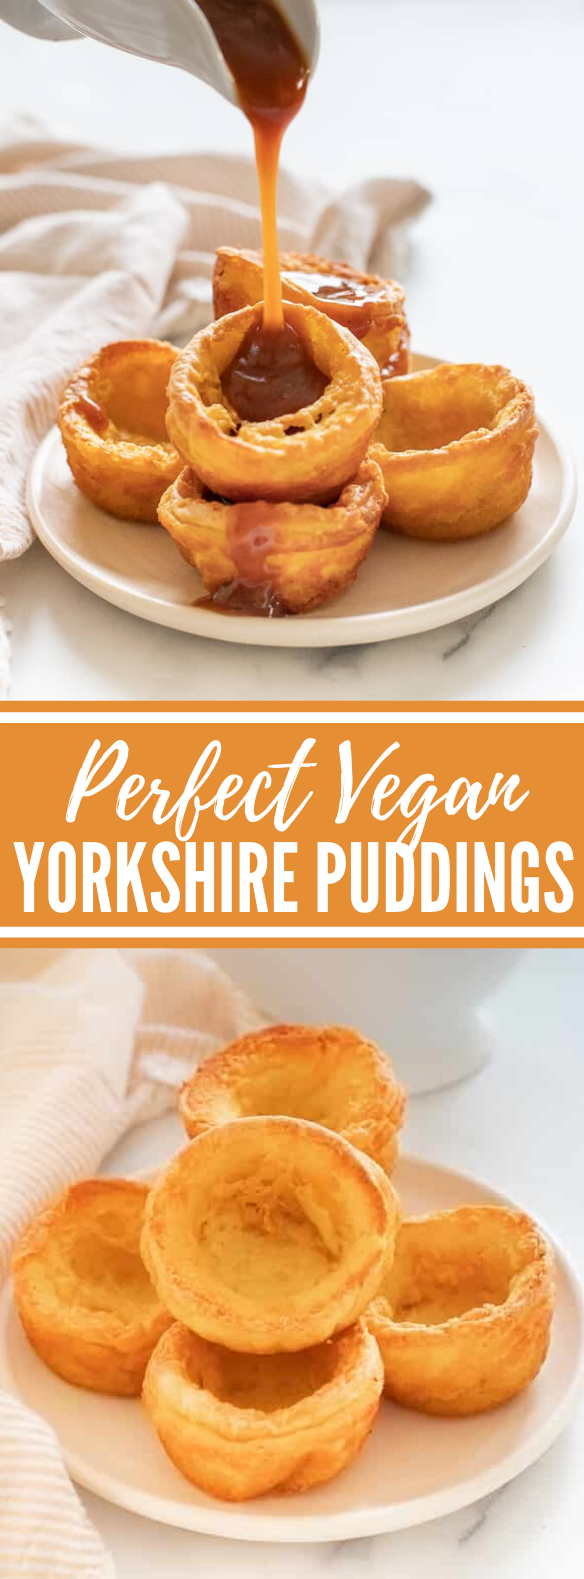 Perfect Vegan Yorkshire Puddings #vegetarian #glutenfree